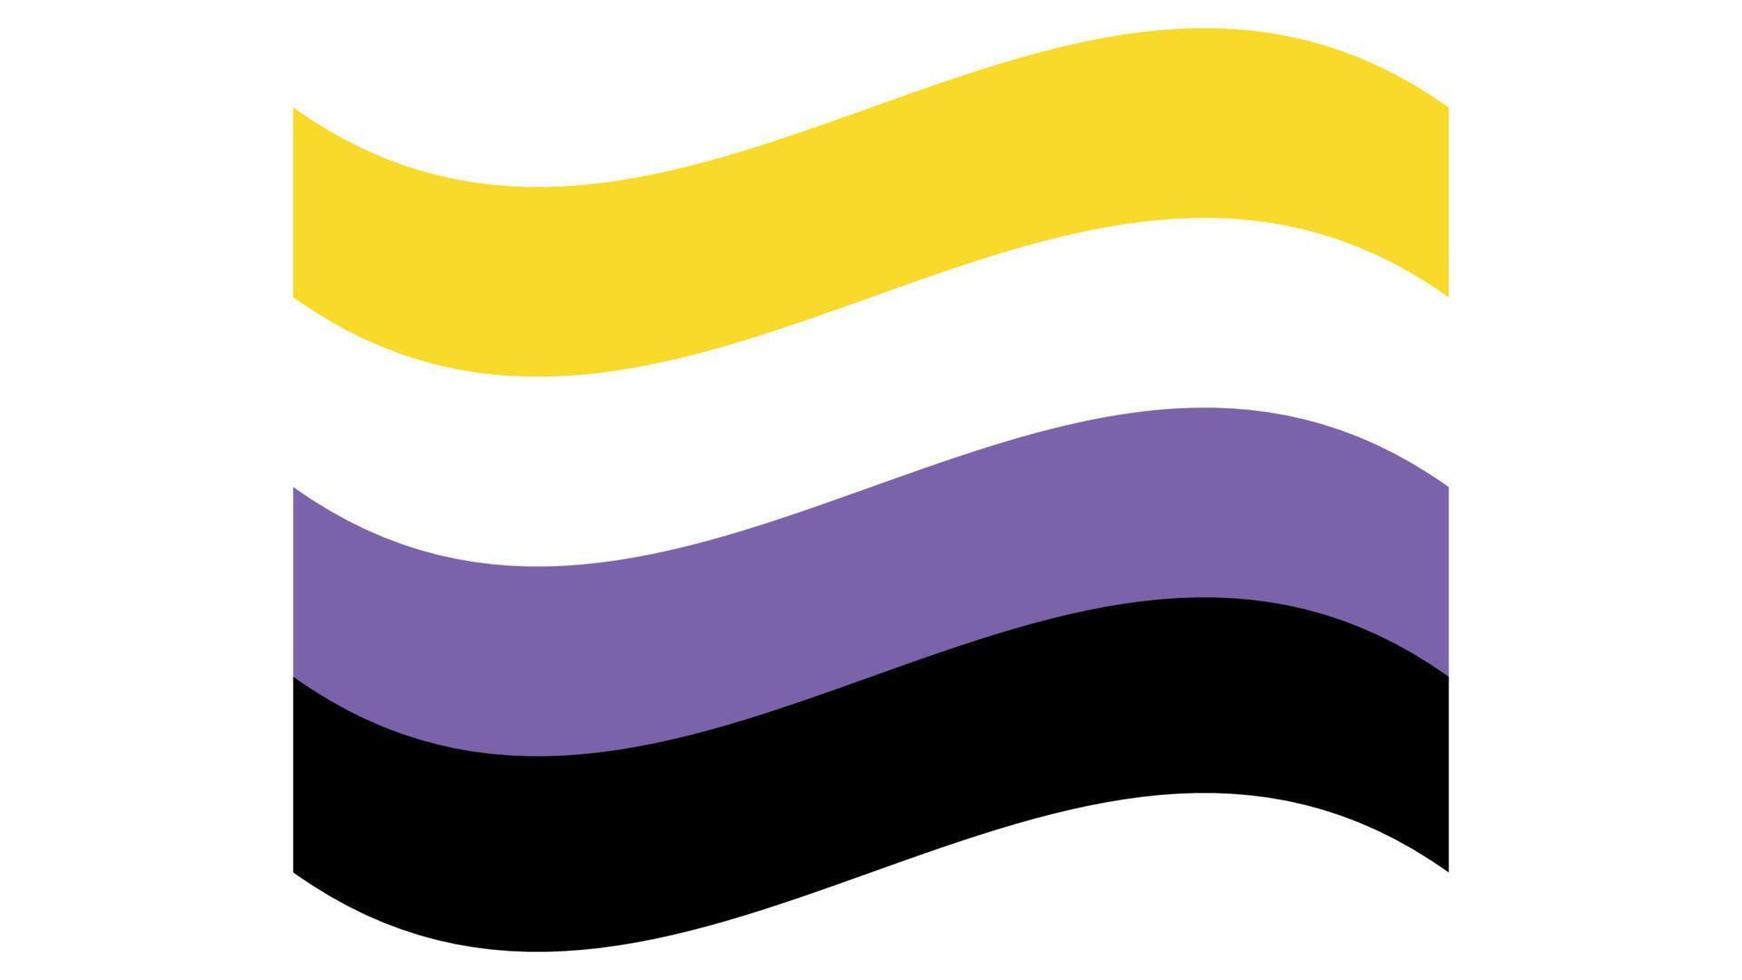 nicht-binäre Pride-Community-Flagge, lgbt-Symbol. Identität sexueller Minderheiten. Illustration vektor